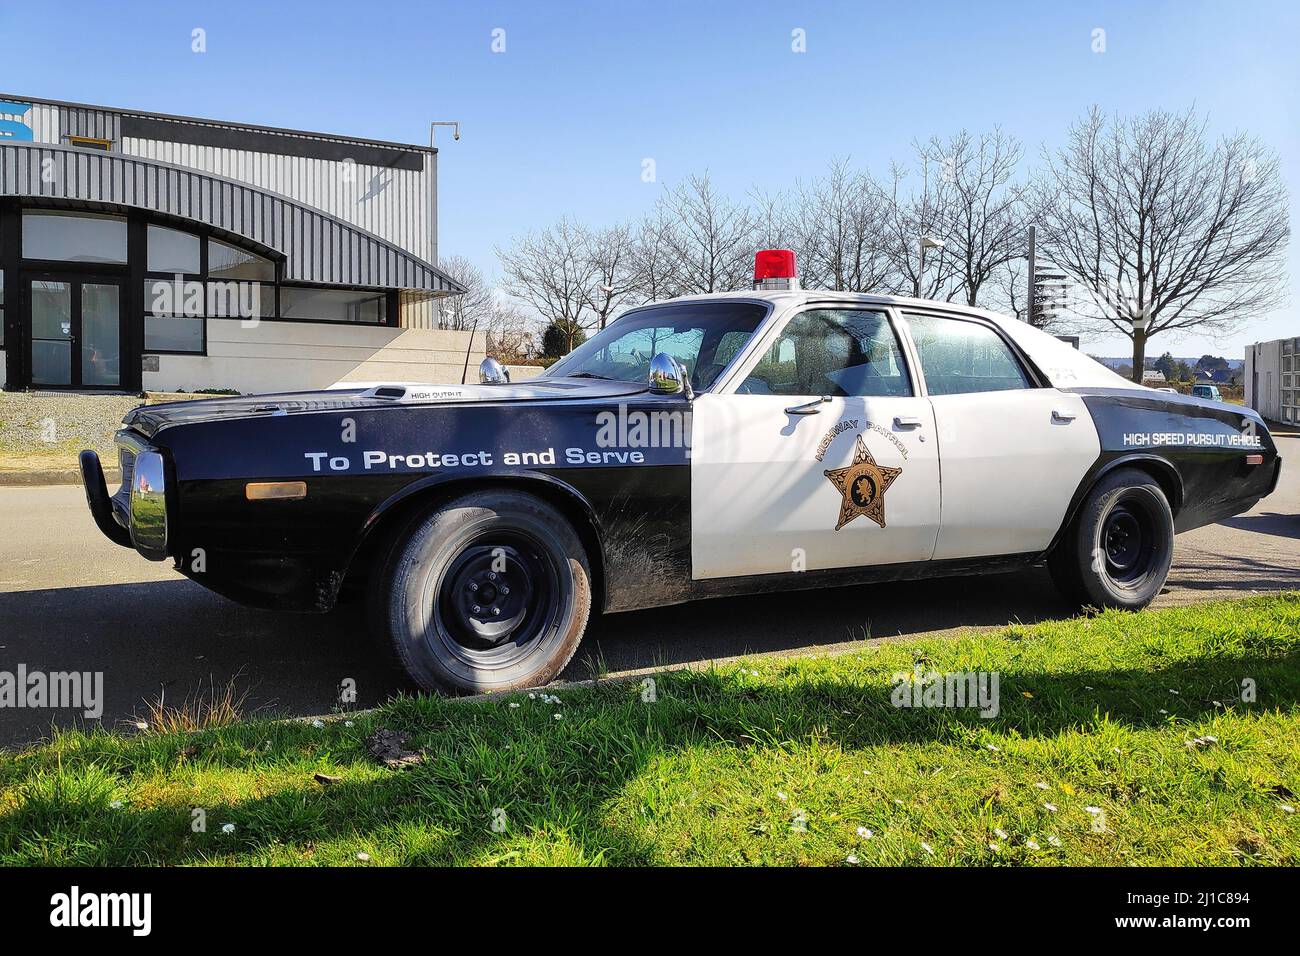 Old police patrol car -Fotos und -Bildmaterial in hoher Auflösung